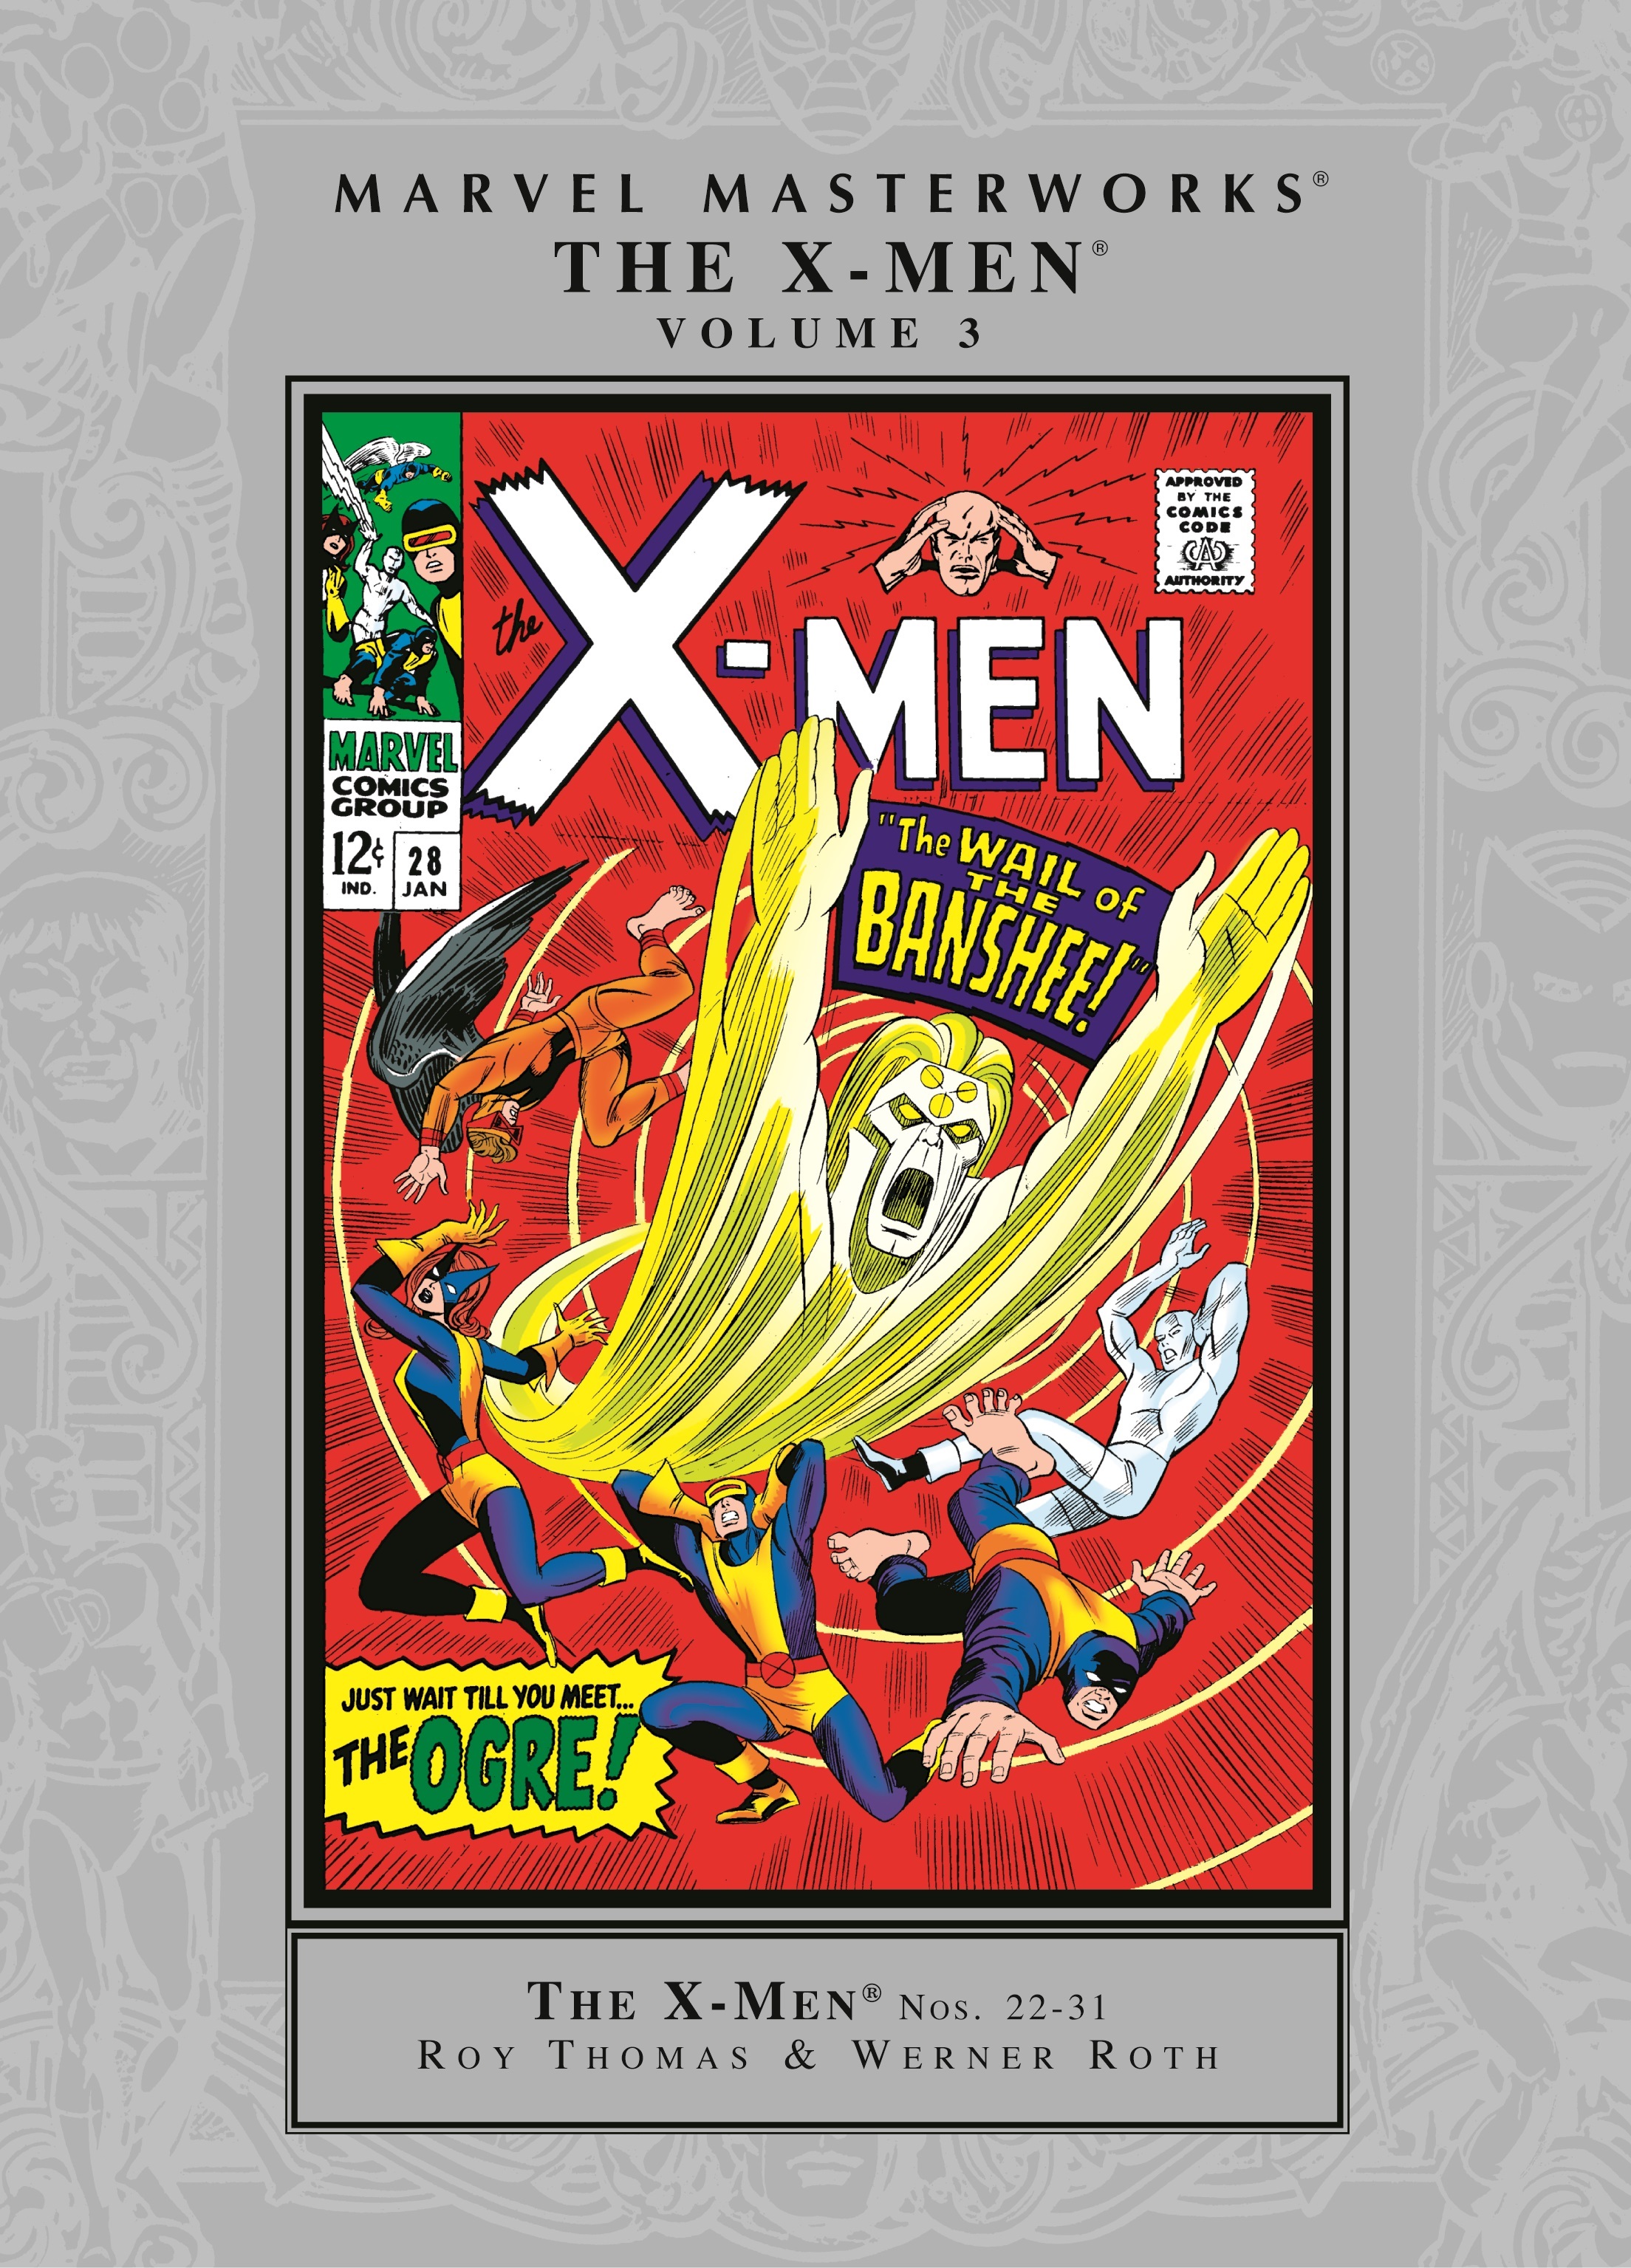 Marvel Masterworks: The X-Men Vol. III - 2nd Edition (1st) (Trade Paperback)